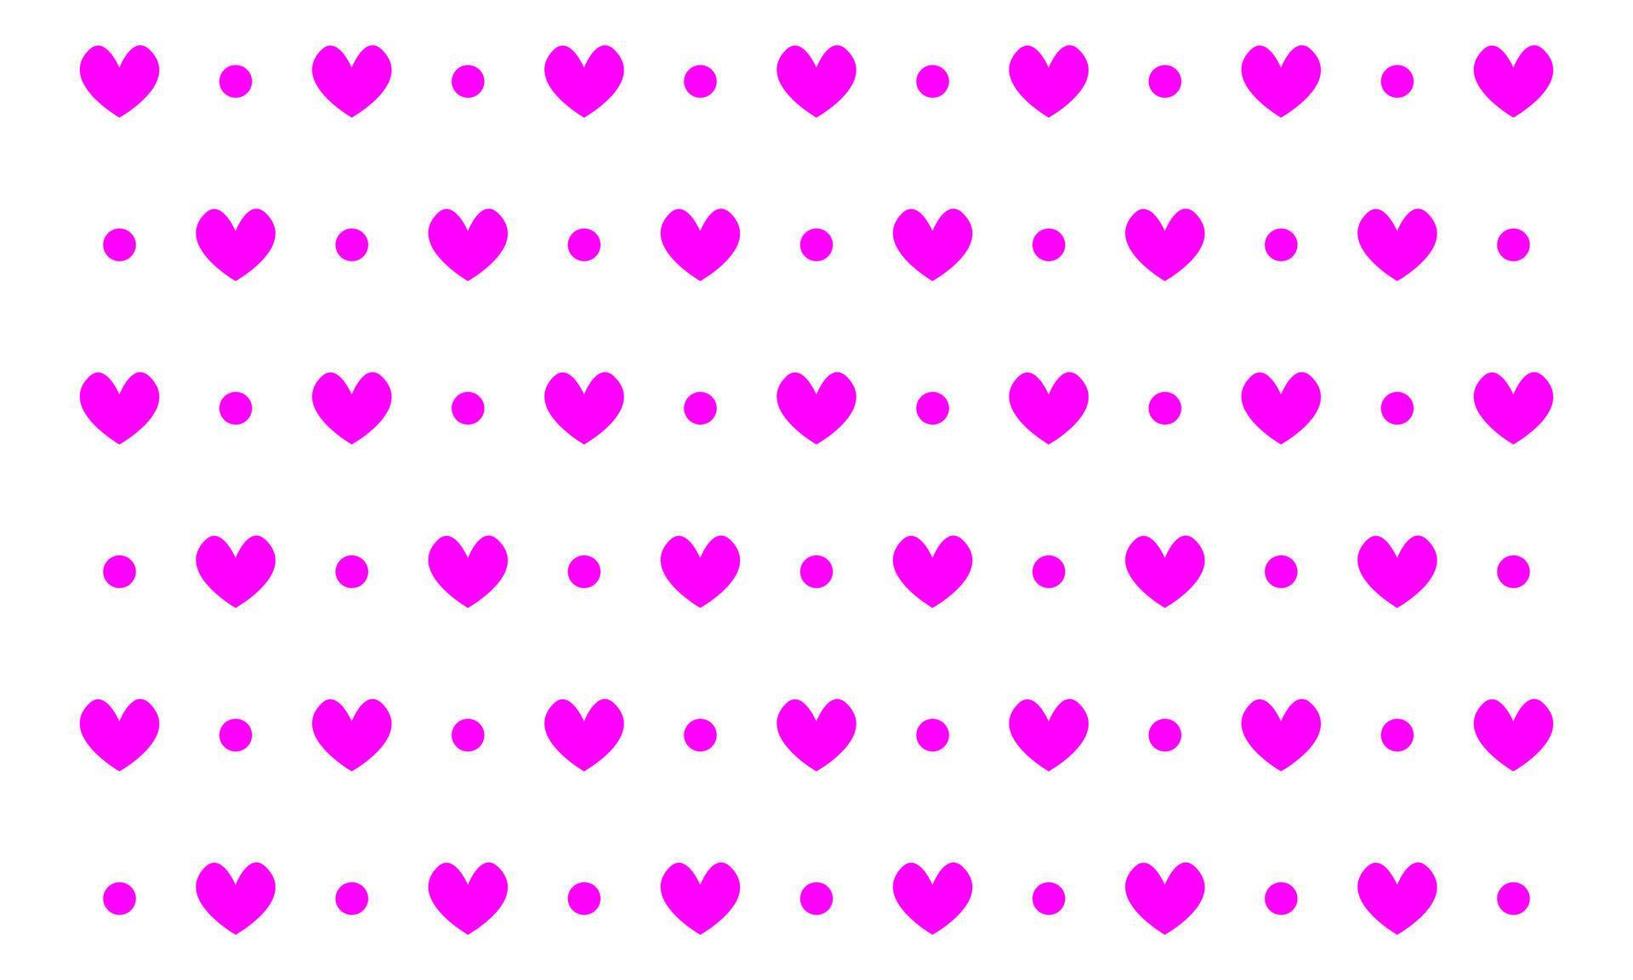 Heart love pattern background. Vector illustration.